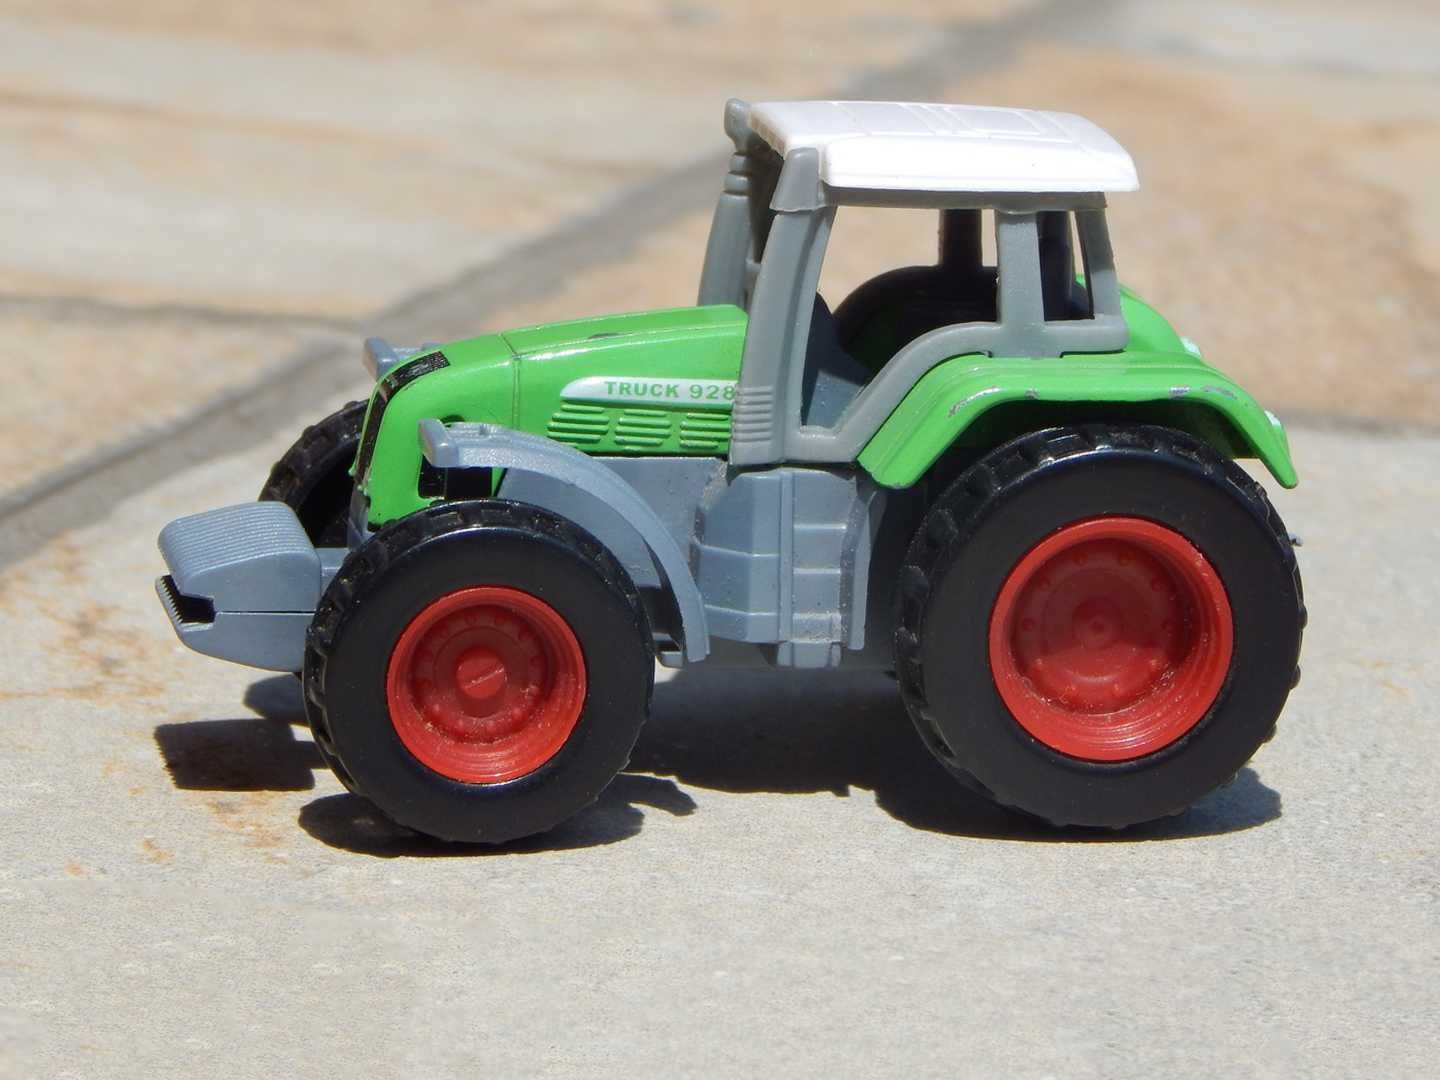 Macheta tractor agricol ferma Truck 928 scara 1:72